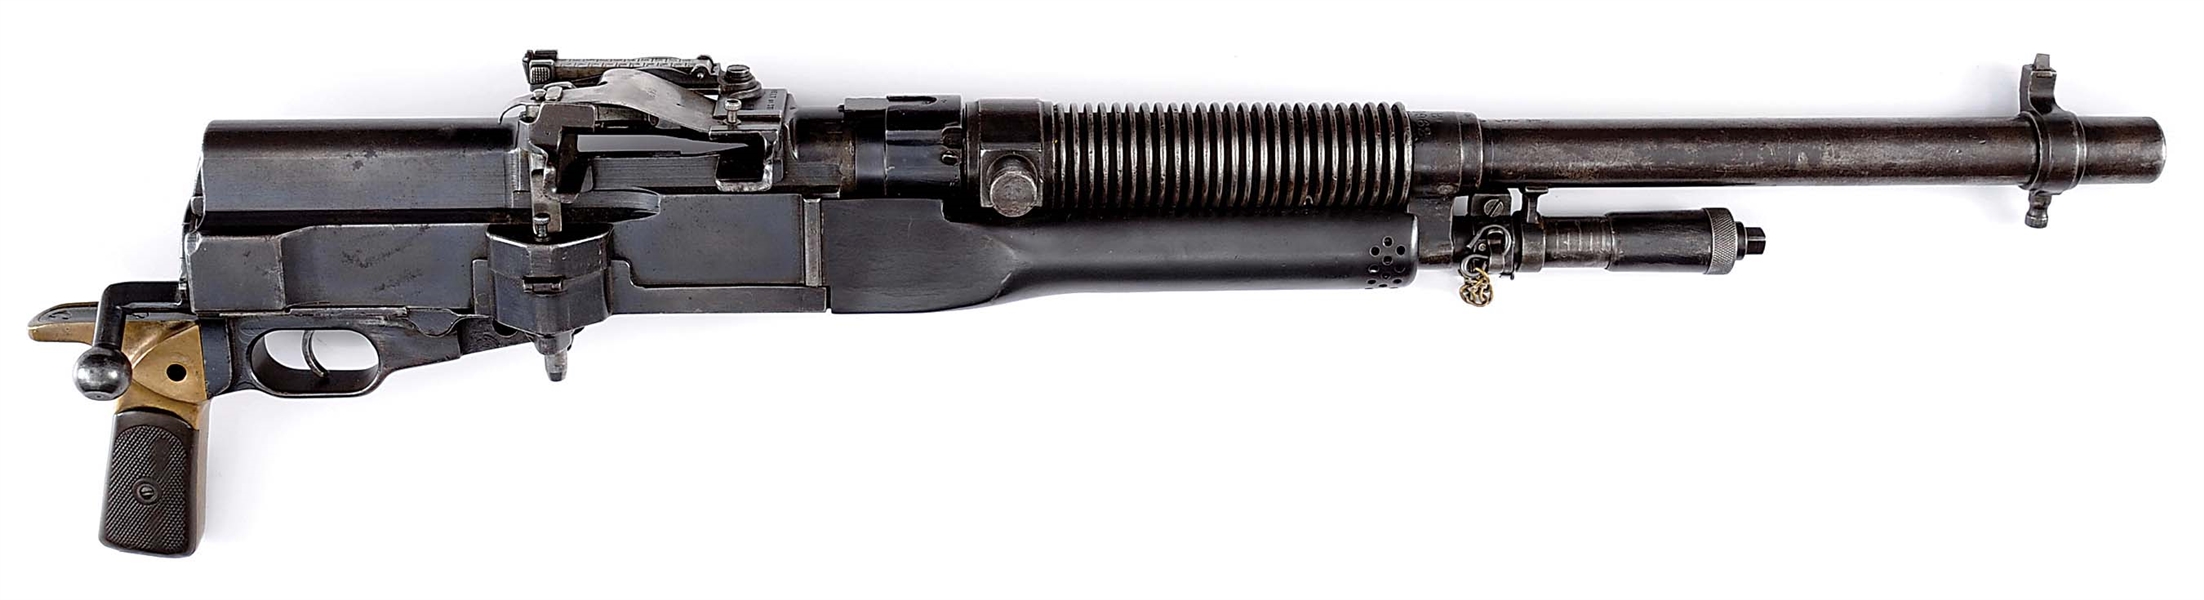 (N) BRITISH HOTCHKISS MODEL 1909 MARK I PORTABLE MACHINE GUN (CURIO & RELIC).